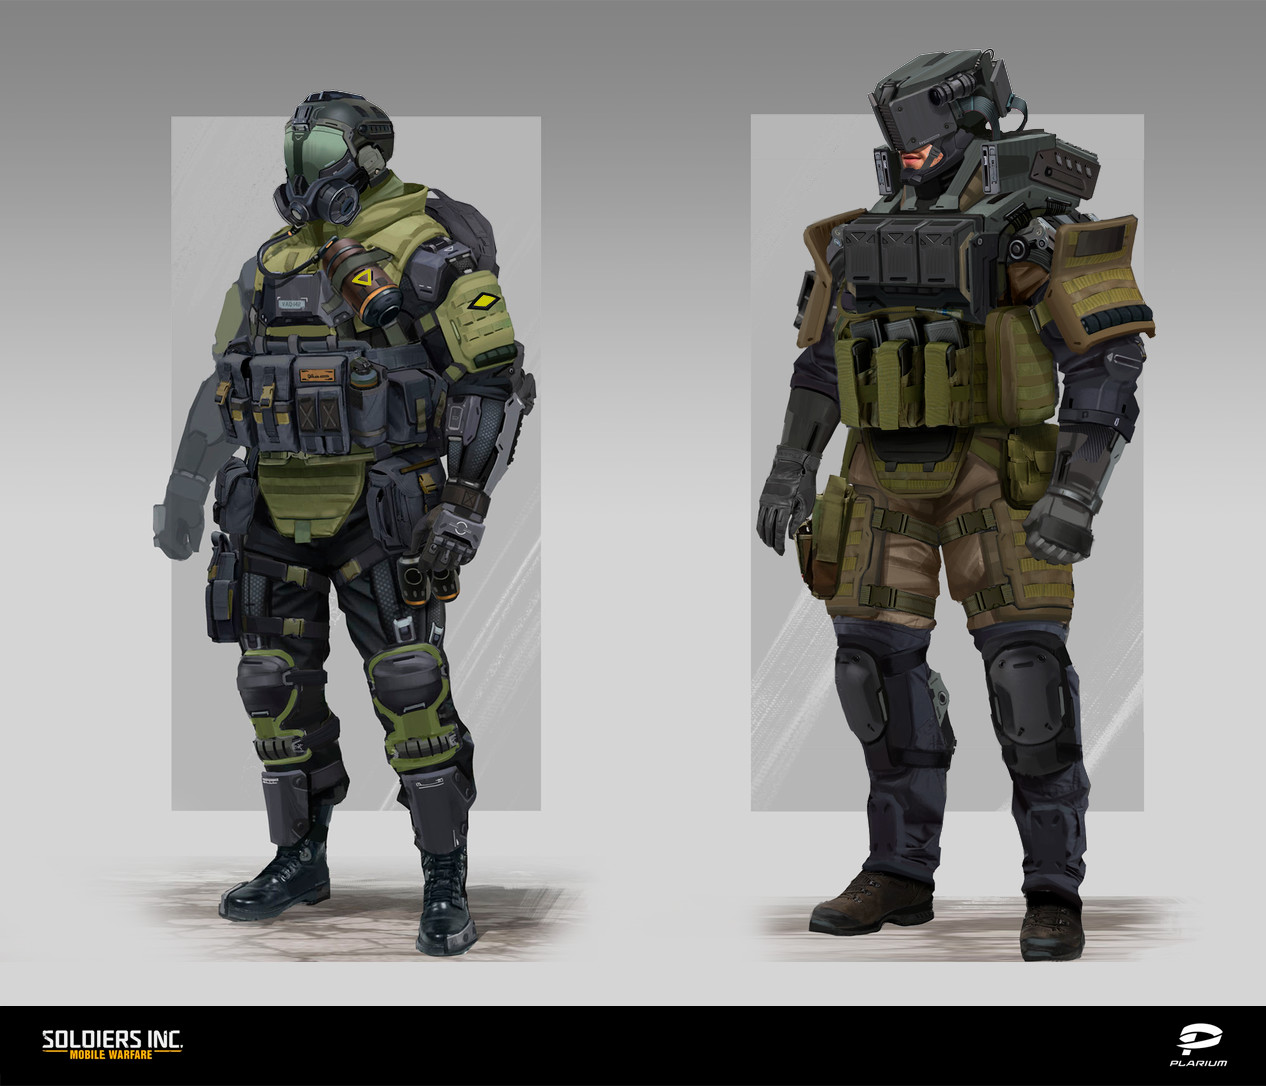 ArtStation - Soldiers Inc. Characters Concept art 2